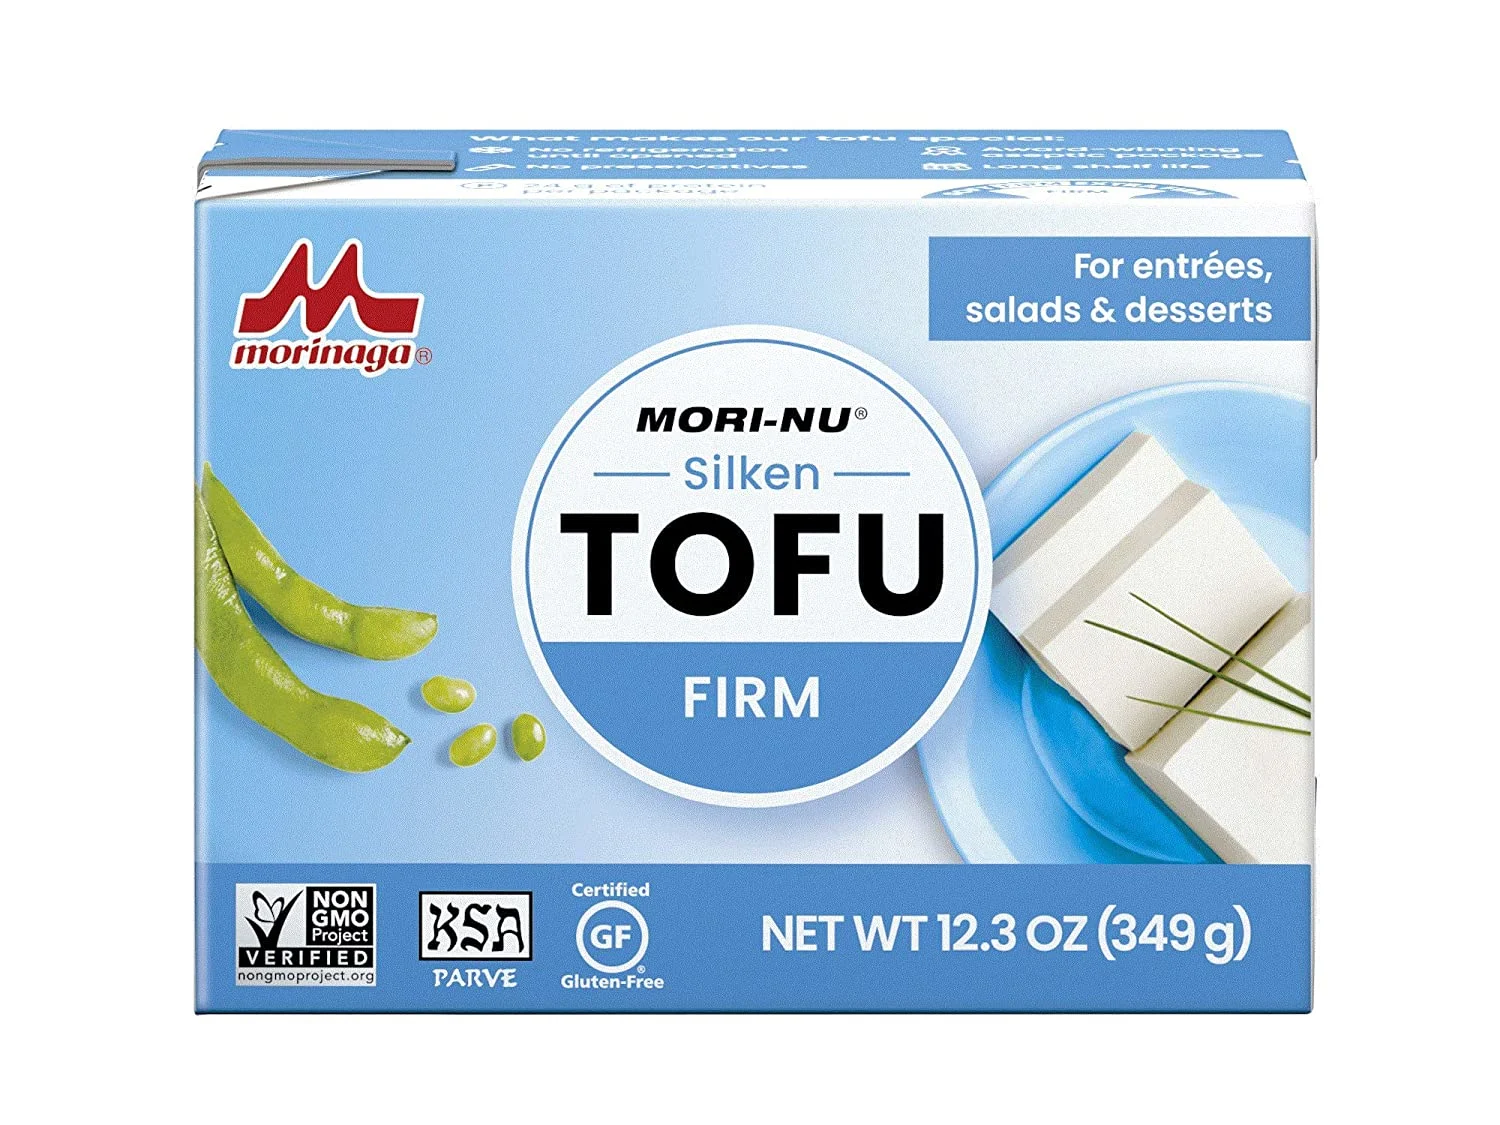 Silken Tofu and Soy milk